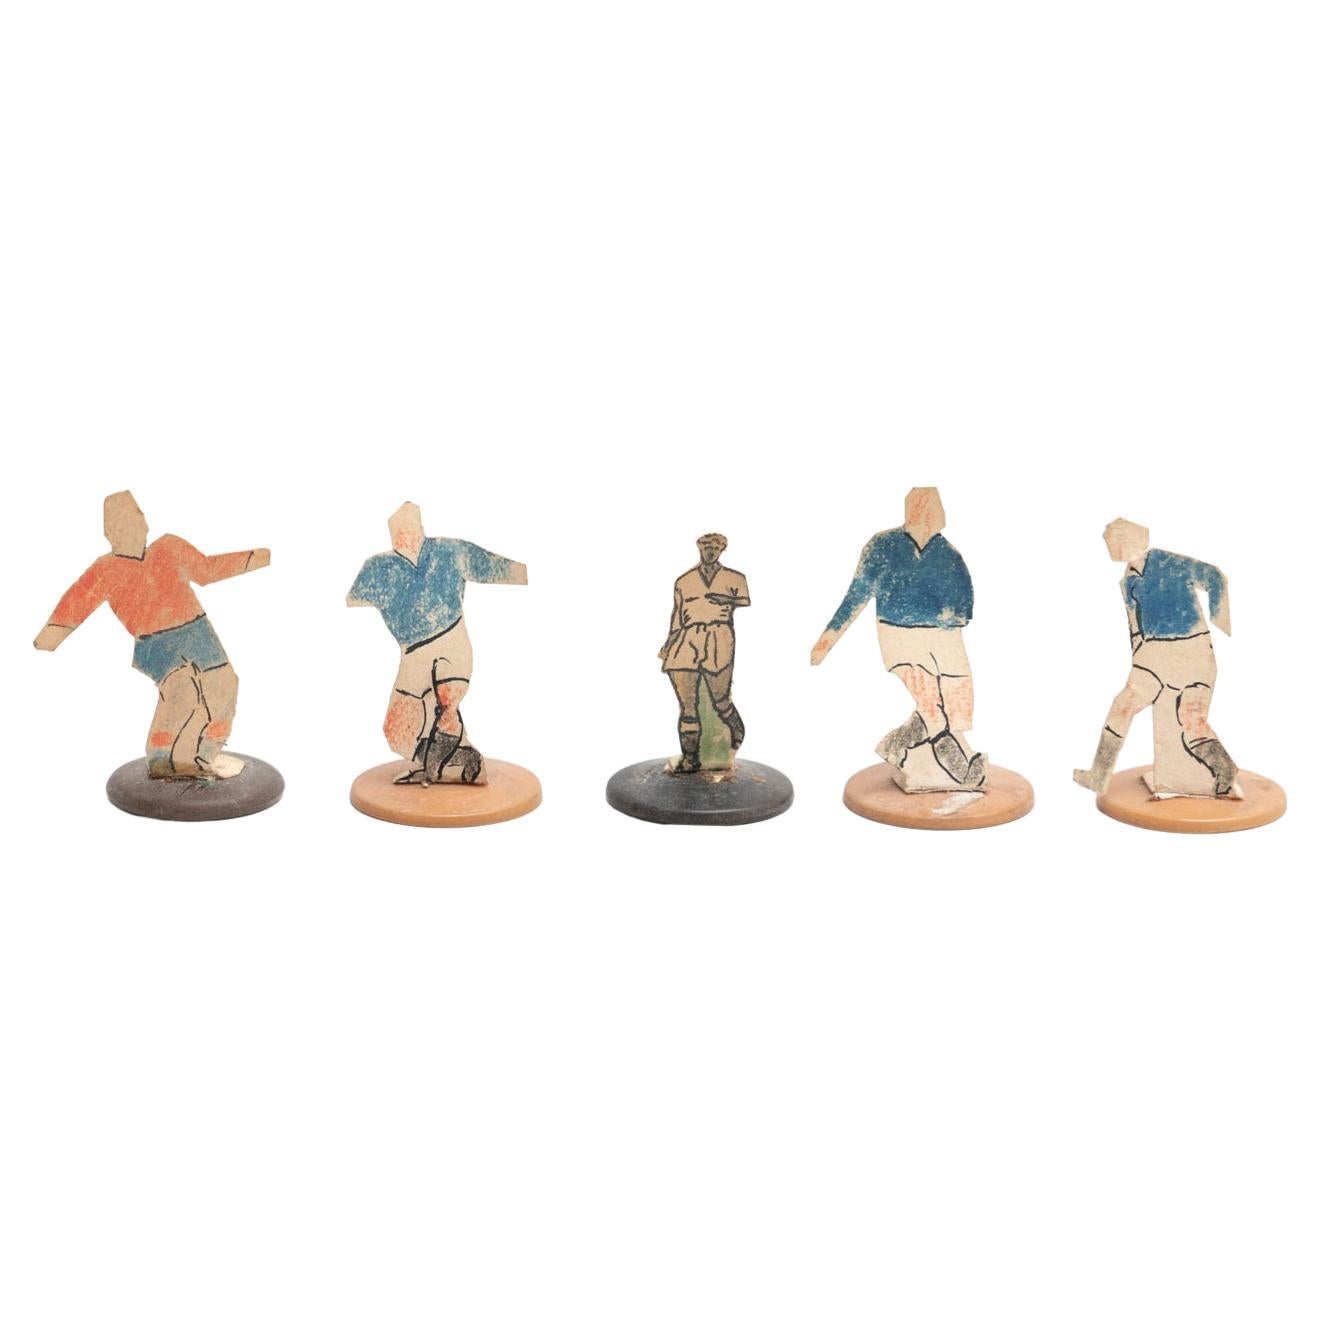 Set of 5 Traditional Antique Button Soccer Game Figures, circa 1950